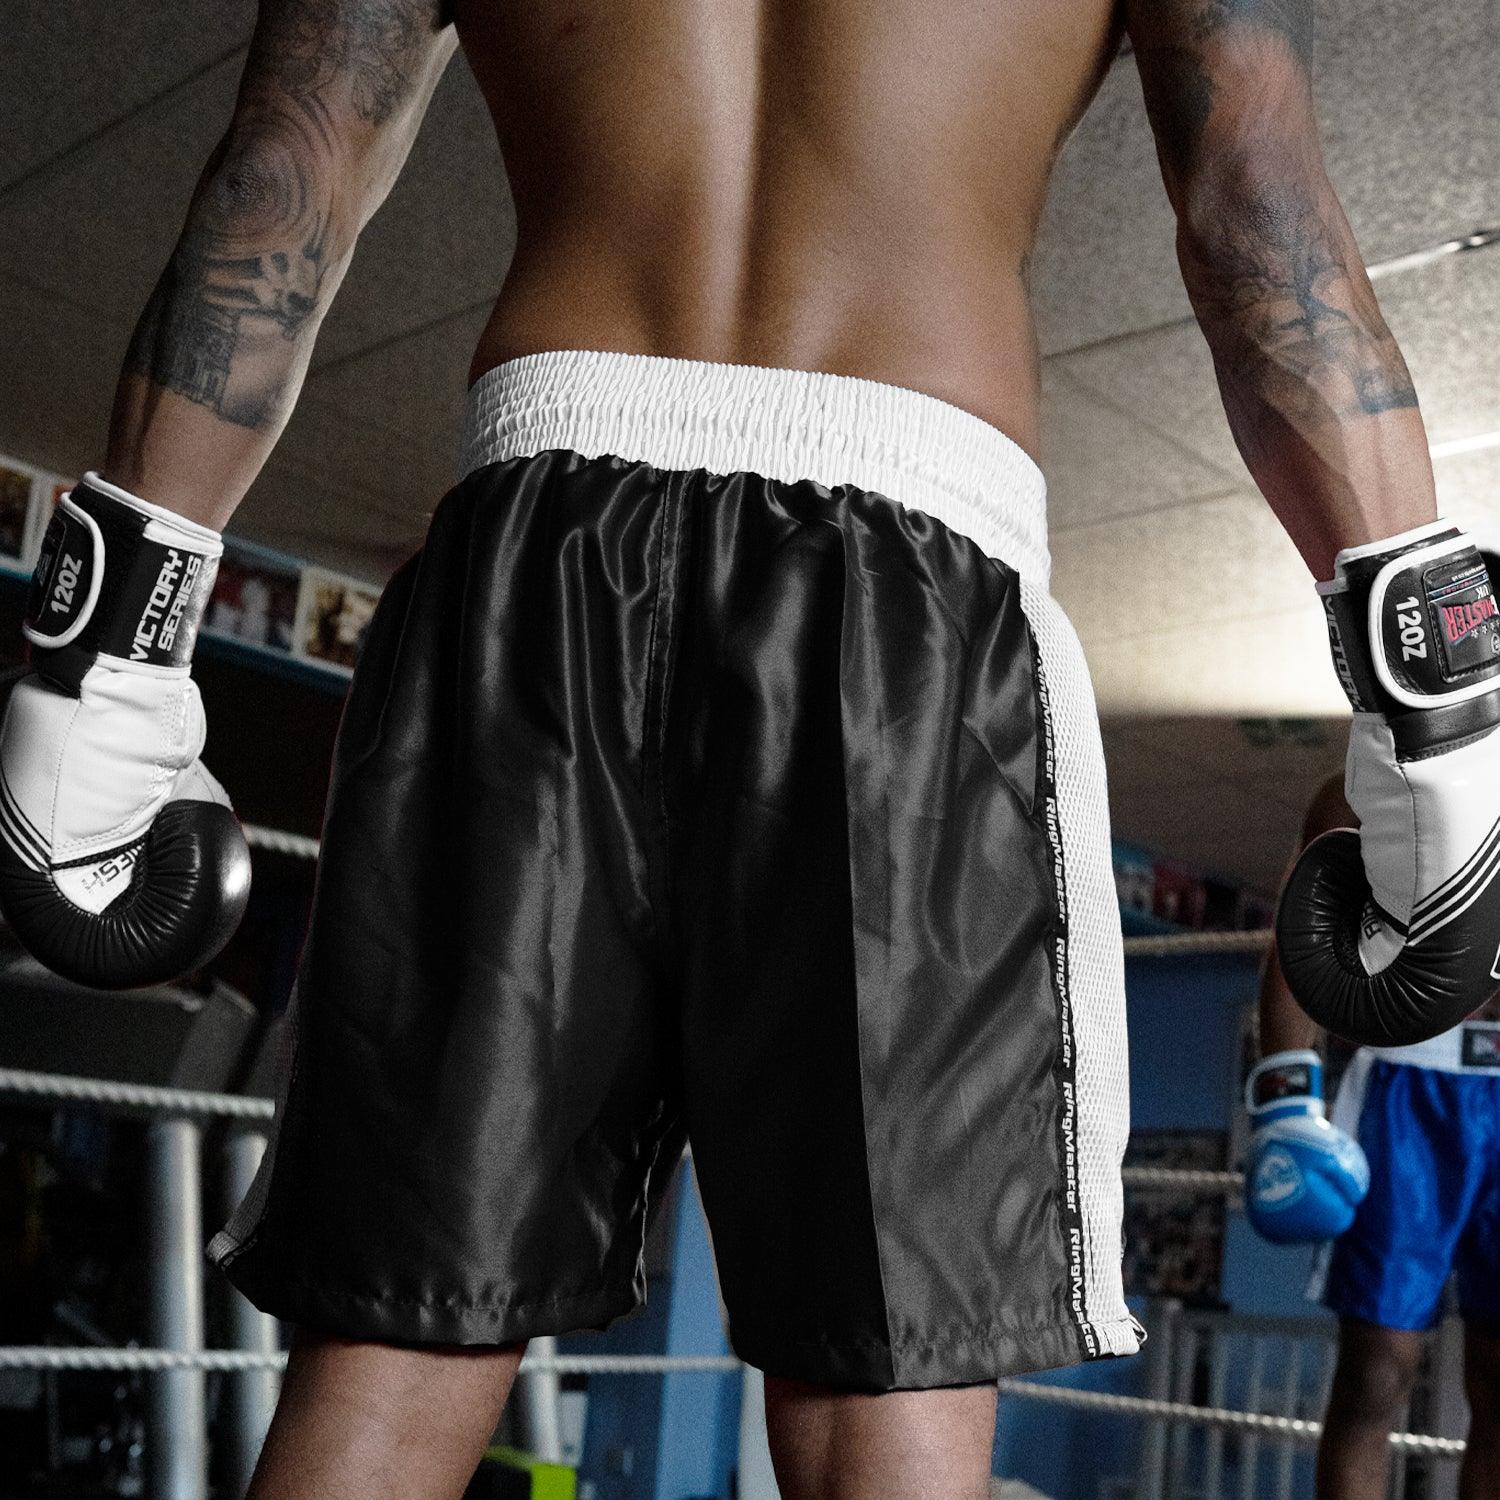 RingMaster Sports BoxR Kids Boxing Shorts Black - RINGMASTER SPORTS - Made For Champions